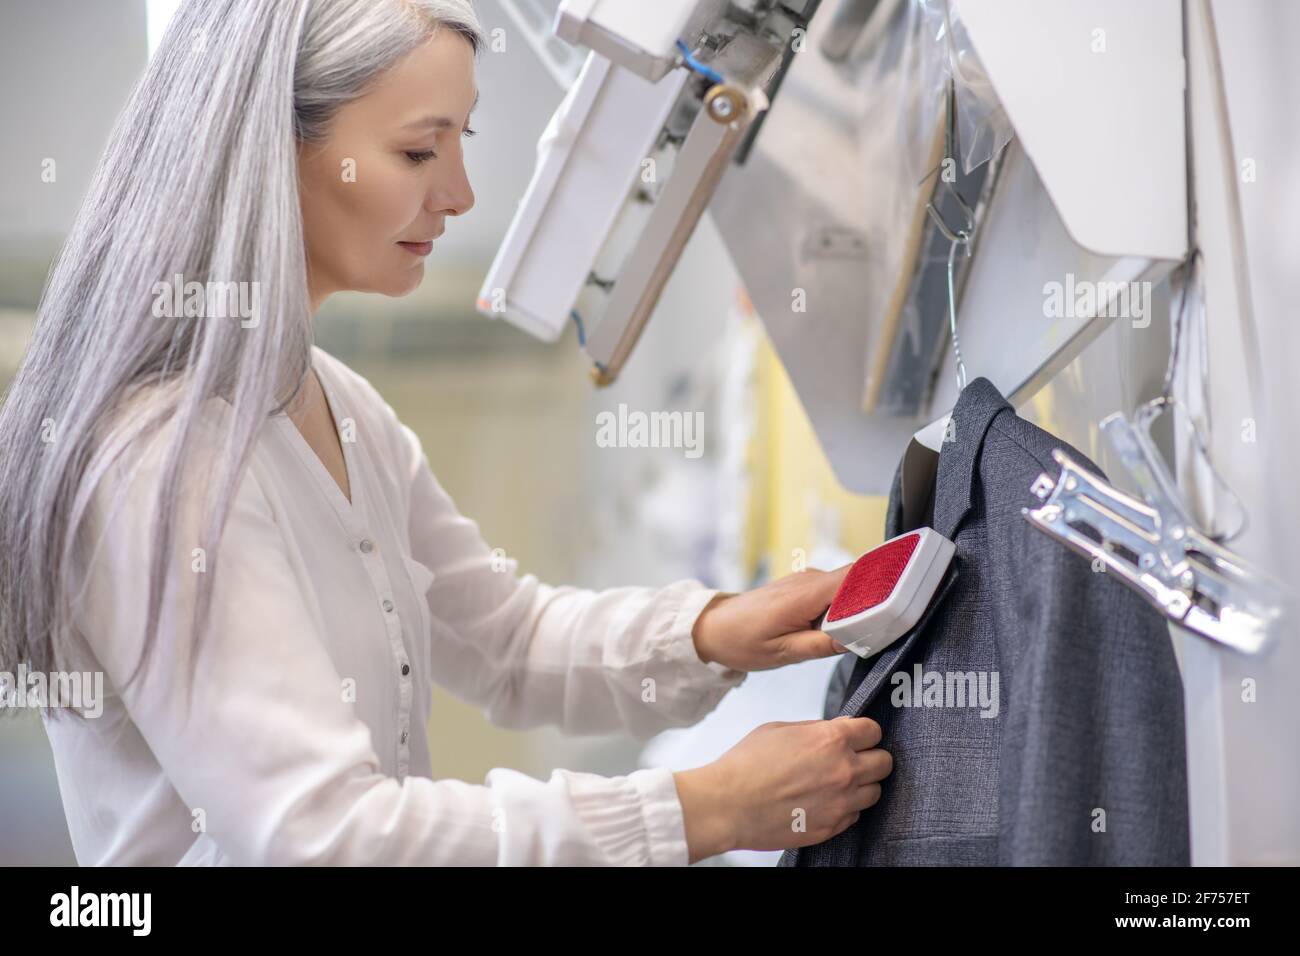 Attentive caring woman brushing hanging jacket Stock Photo